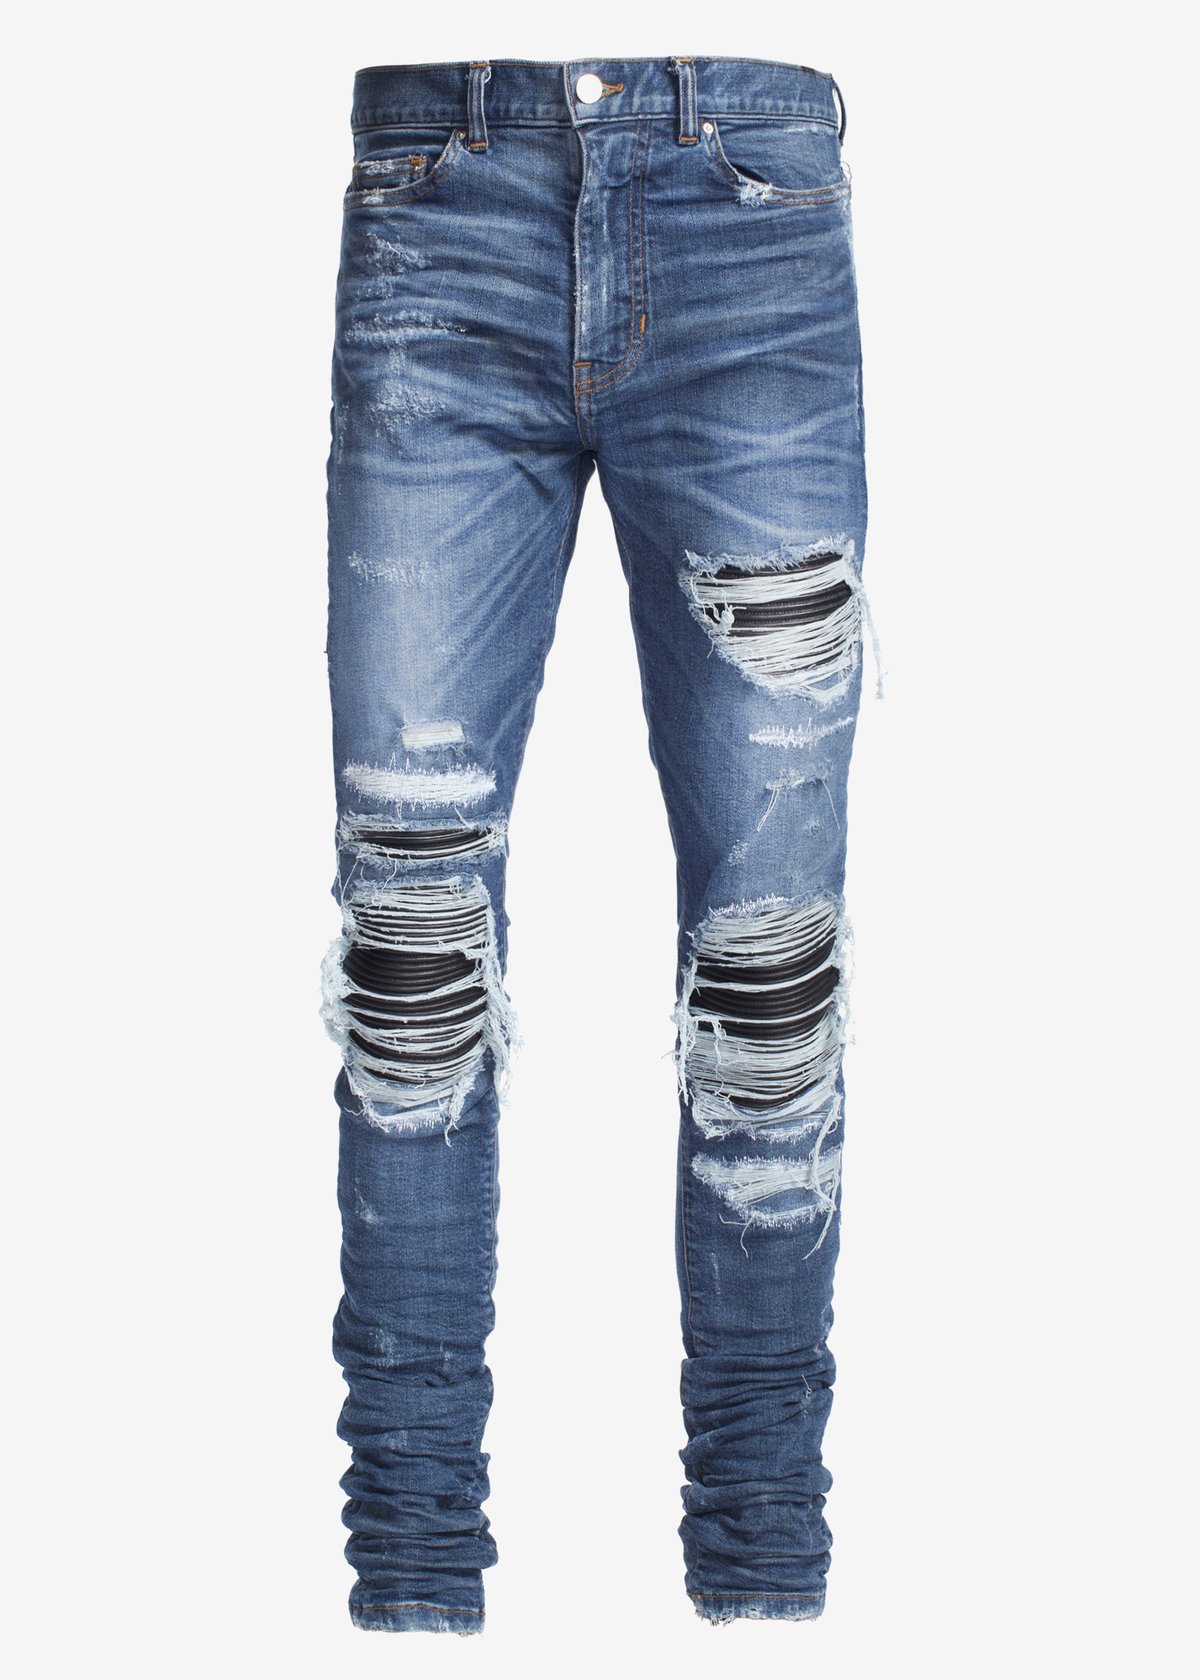 christian audigier jeans price